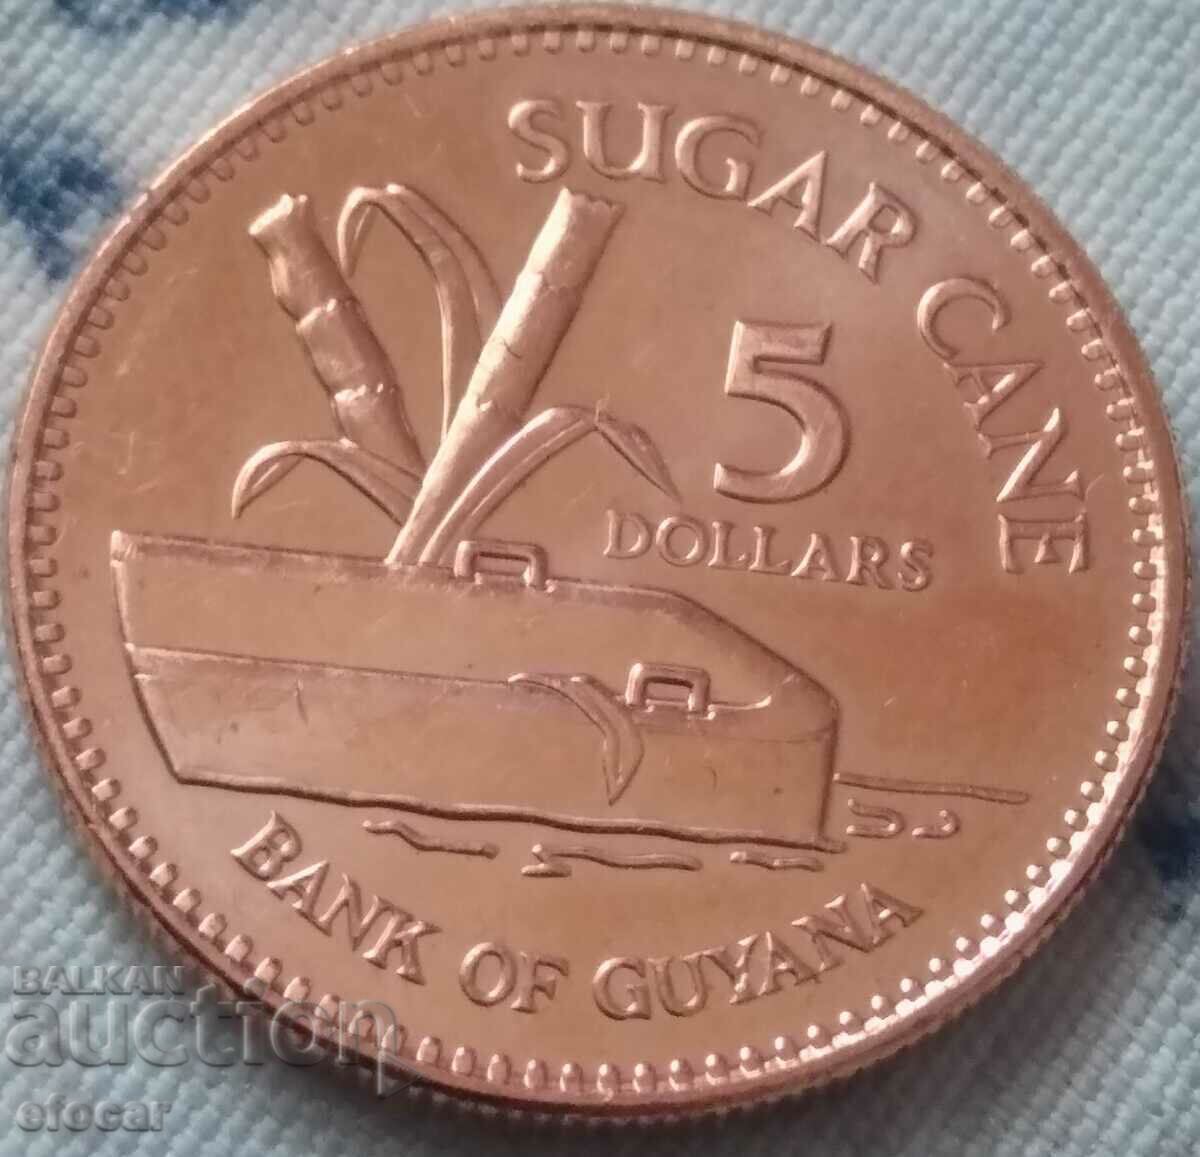 5 dollars Guyana 2019